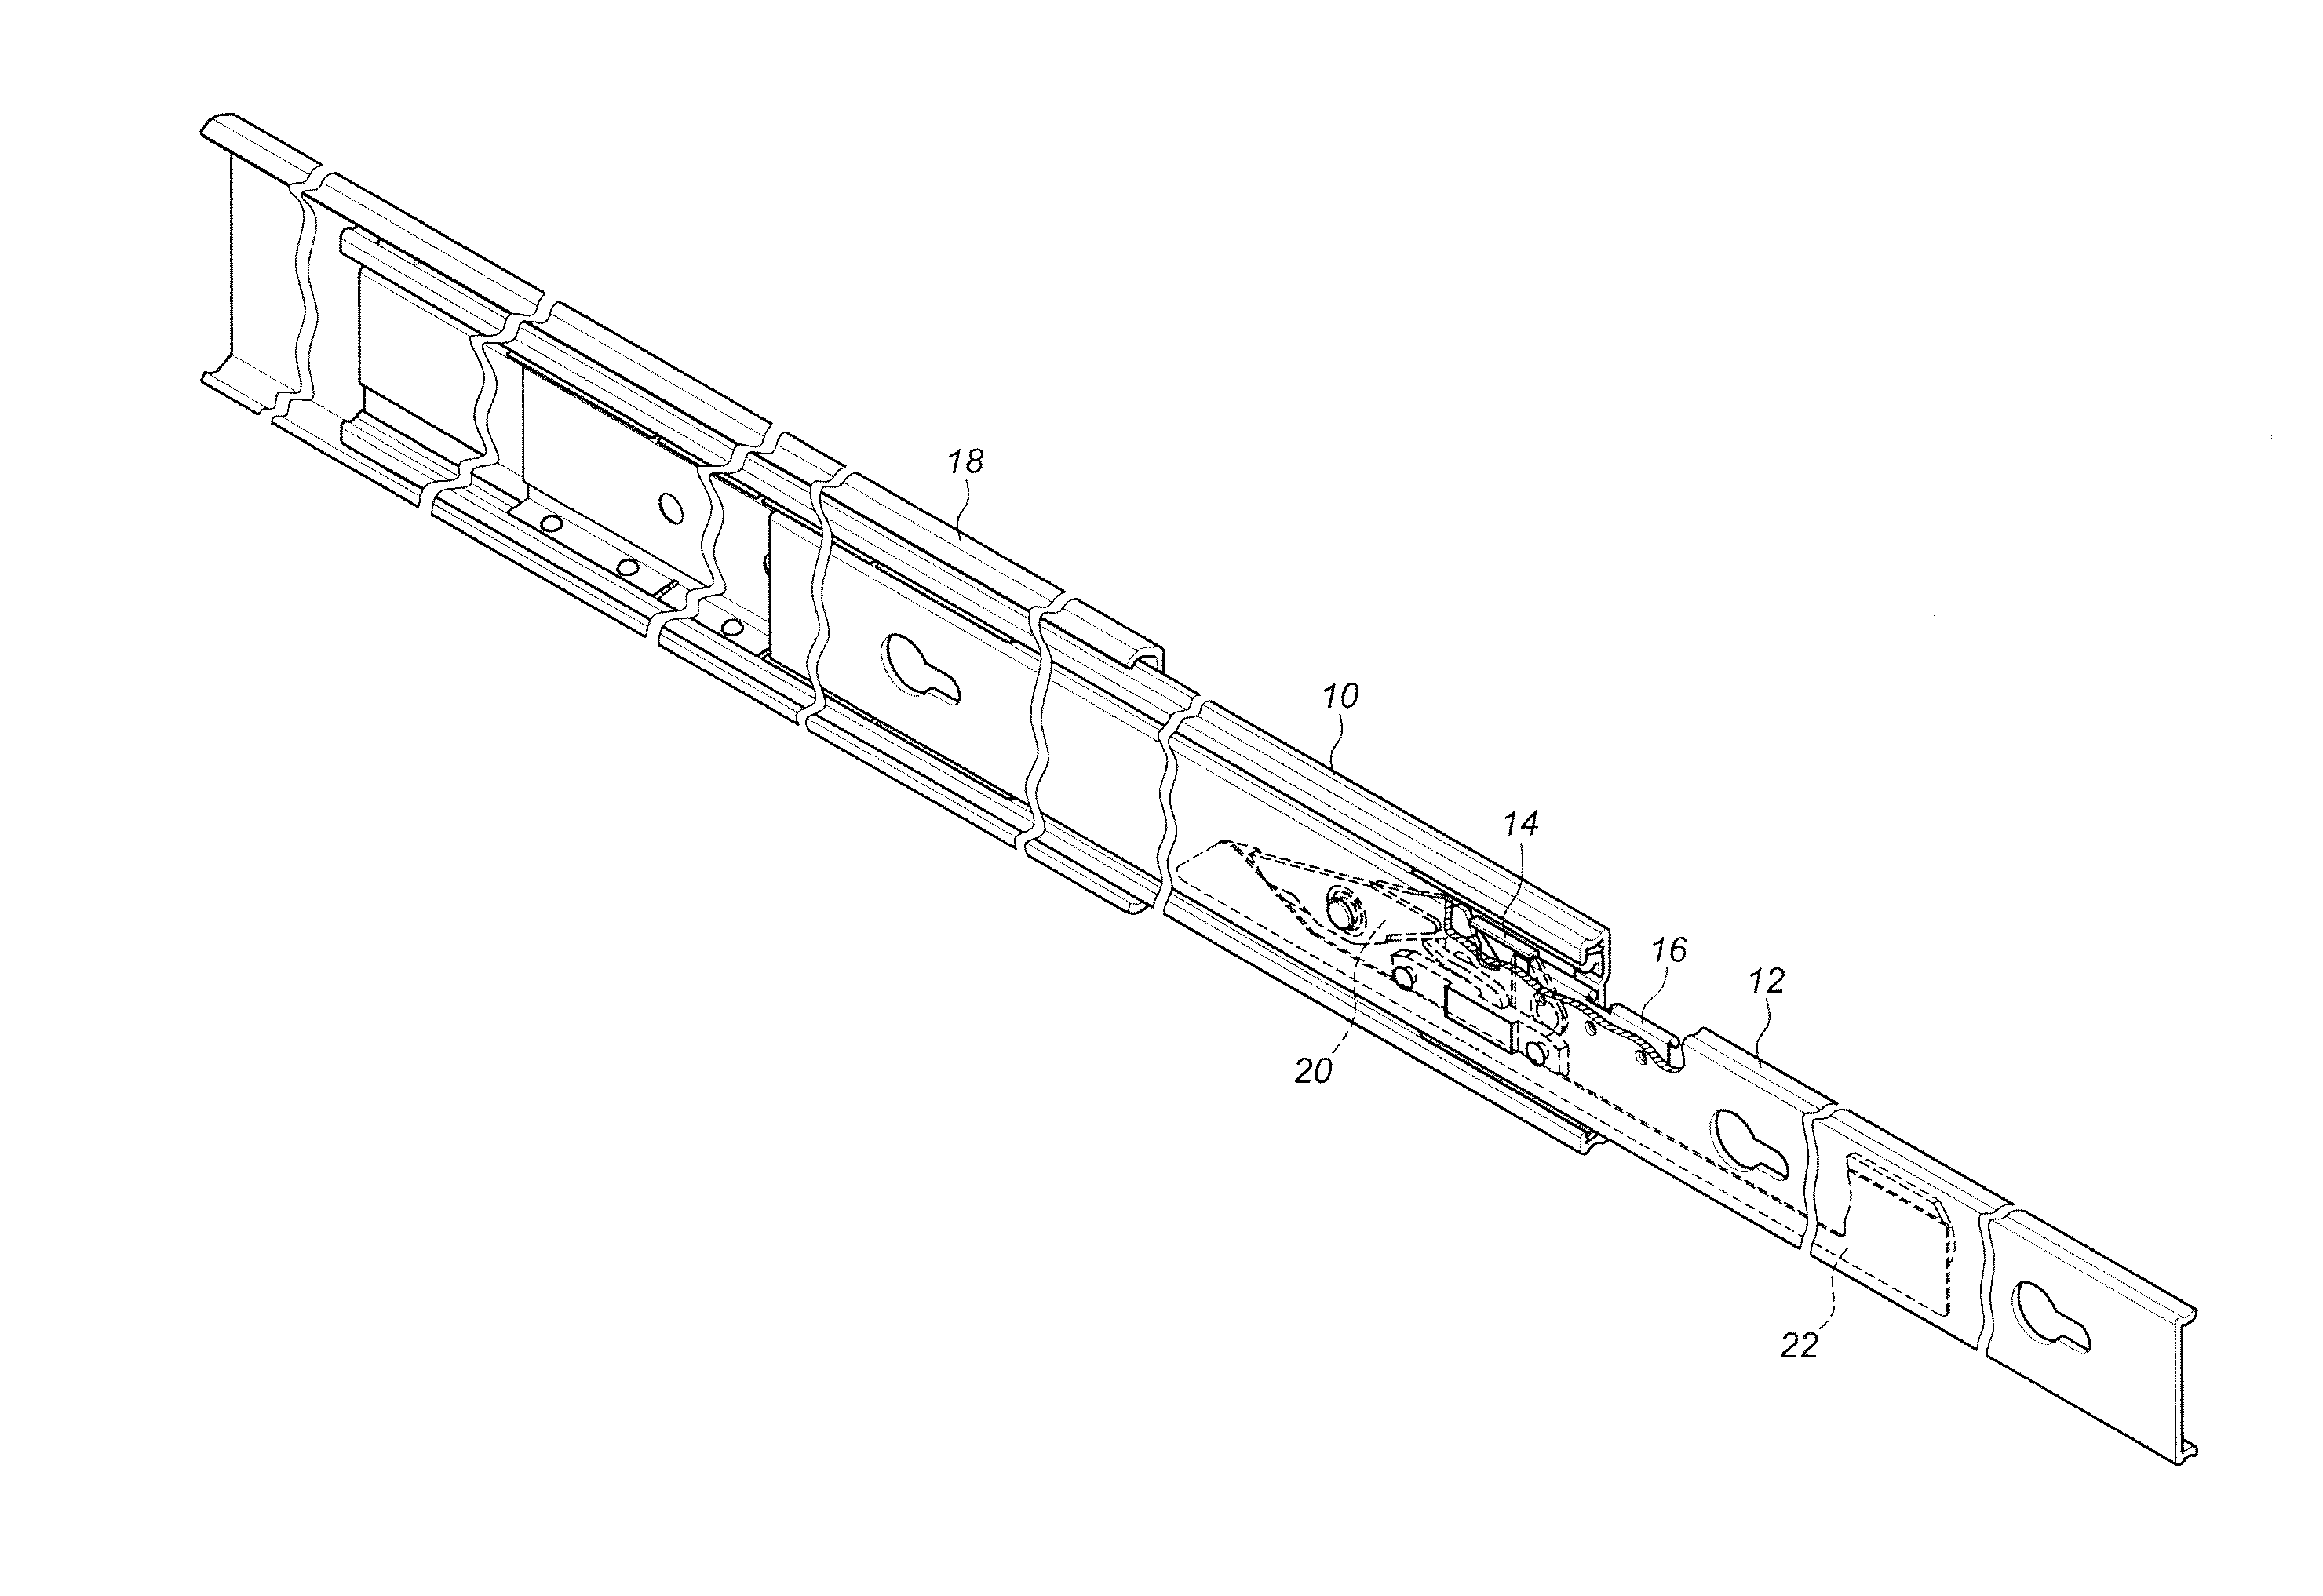 Slide assembly with deceleration device